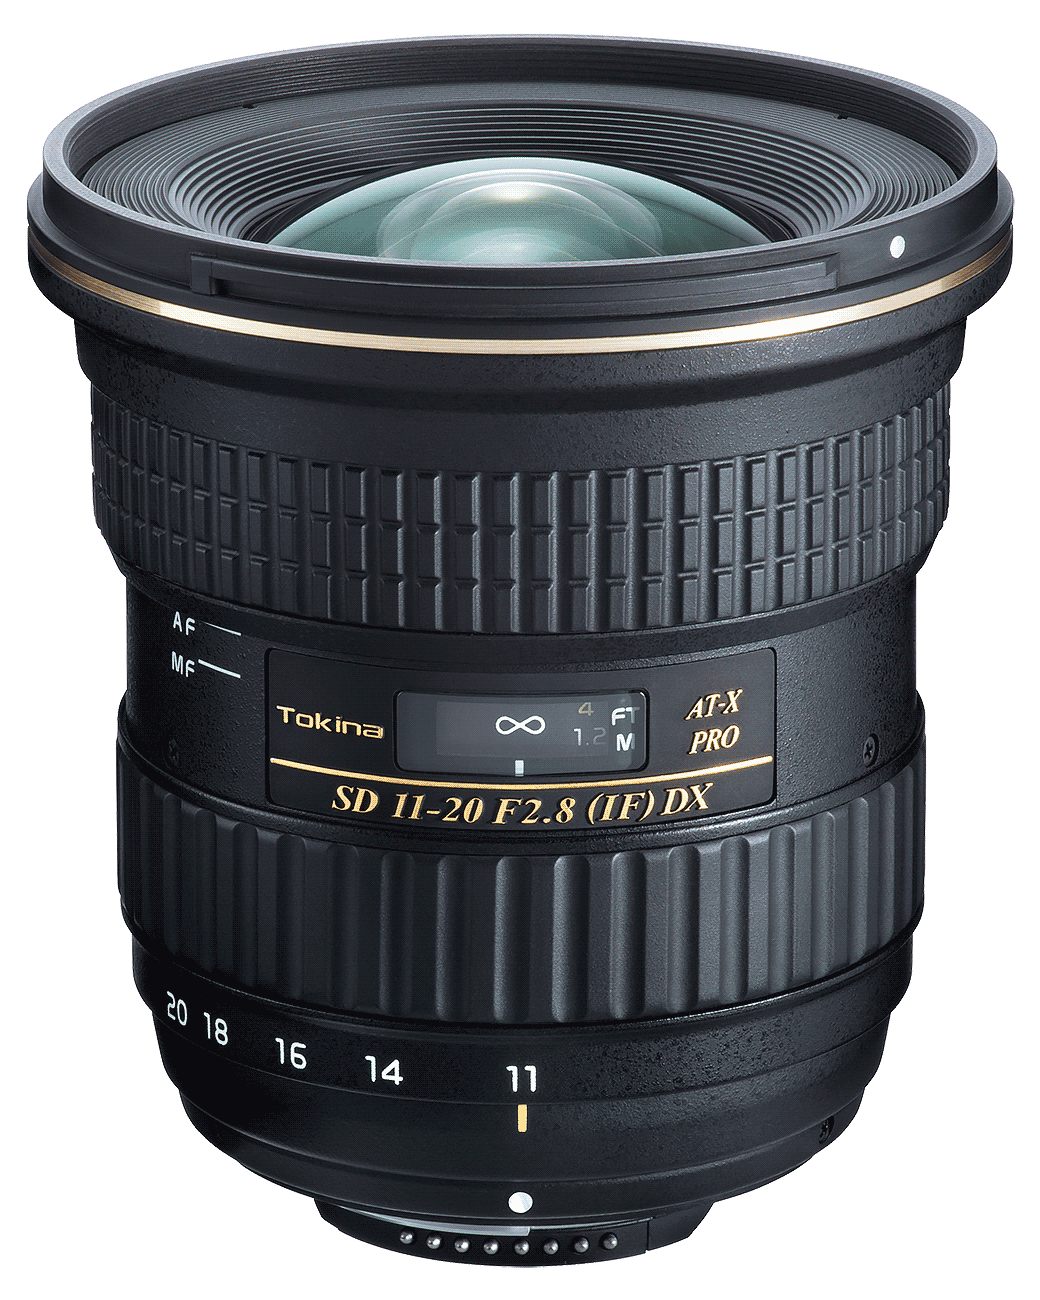 Nikon D5600 Lenses